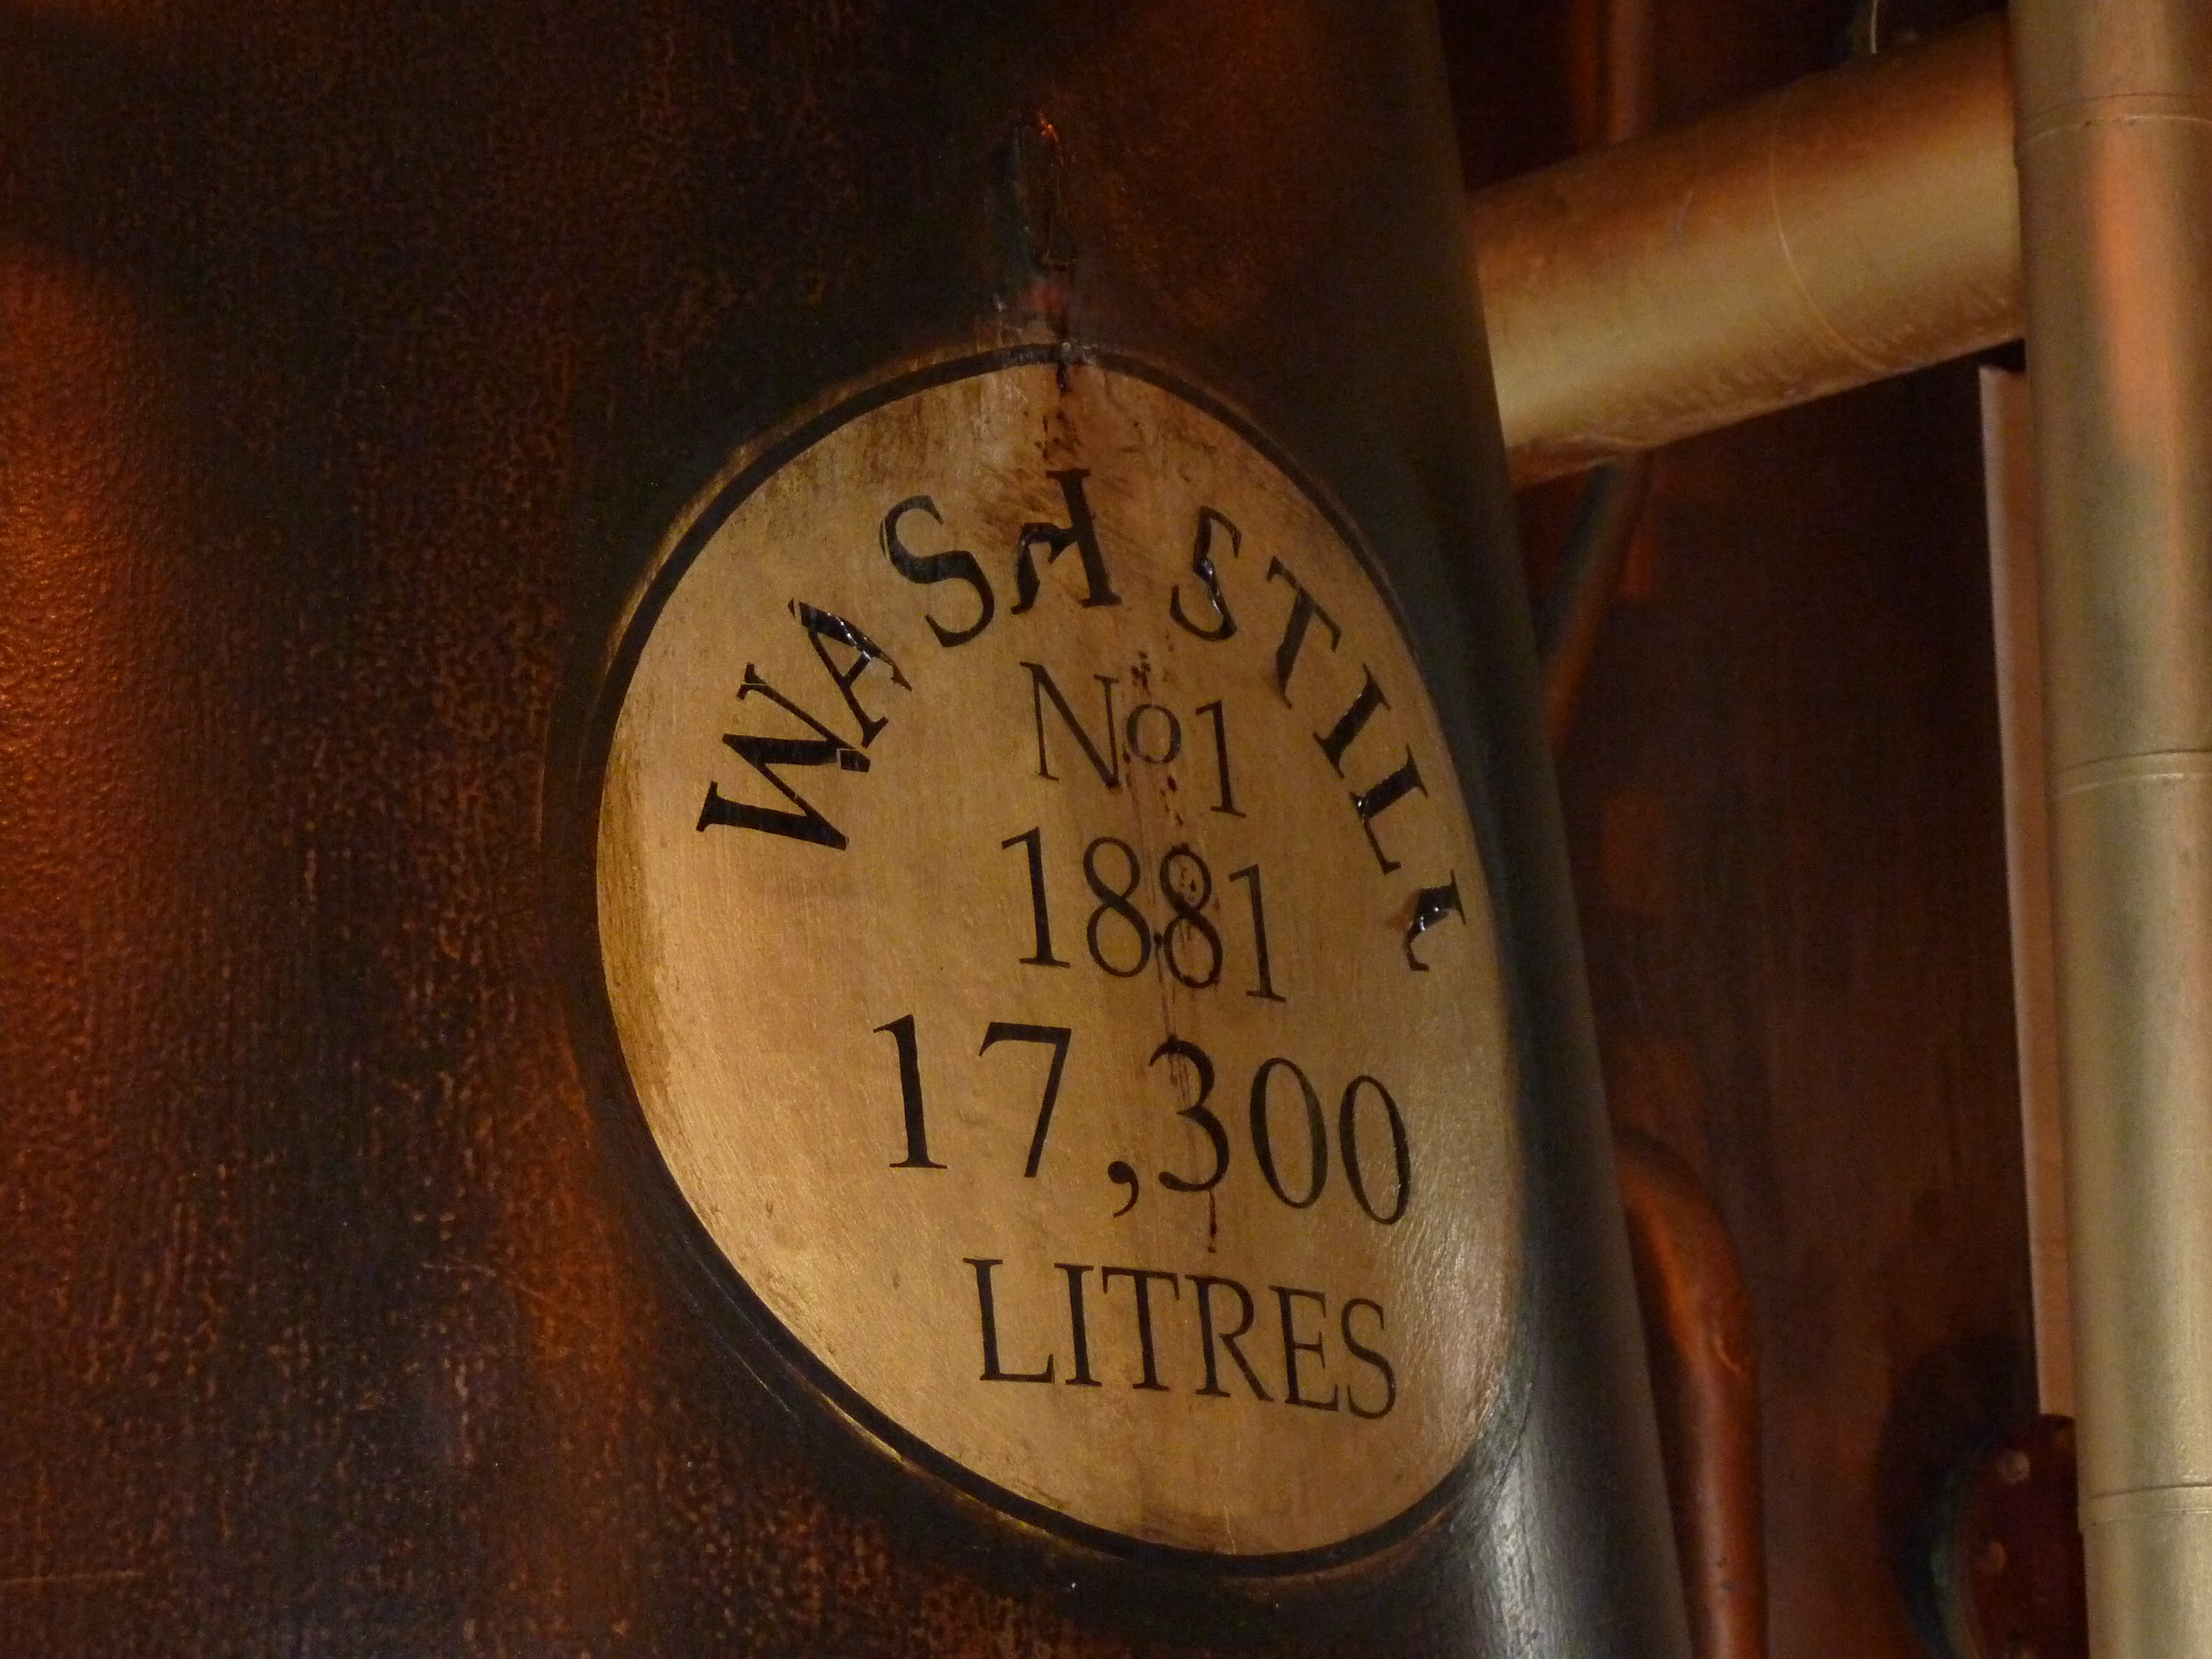 Wash still
Bild: The Whisky Man